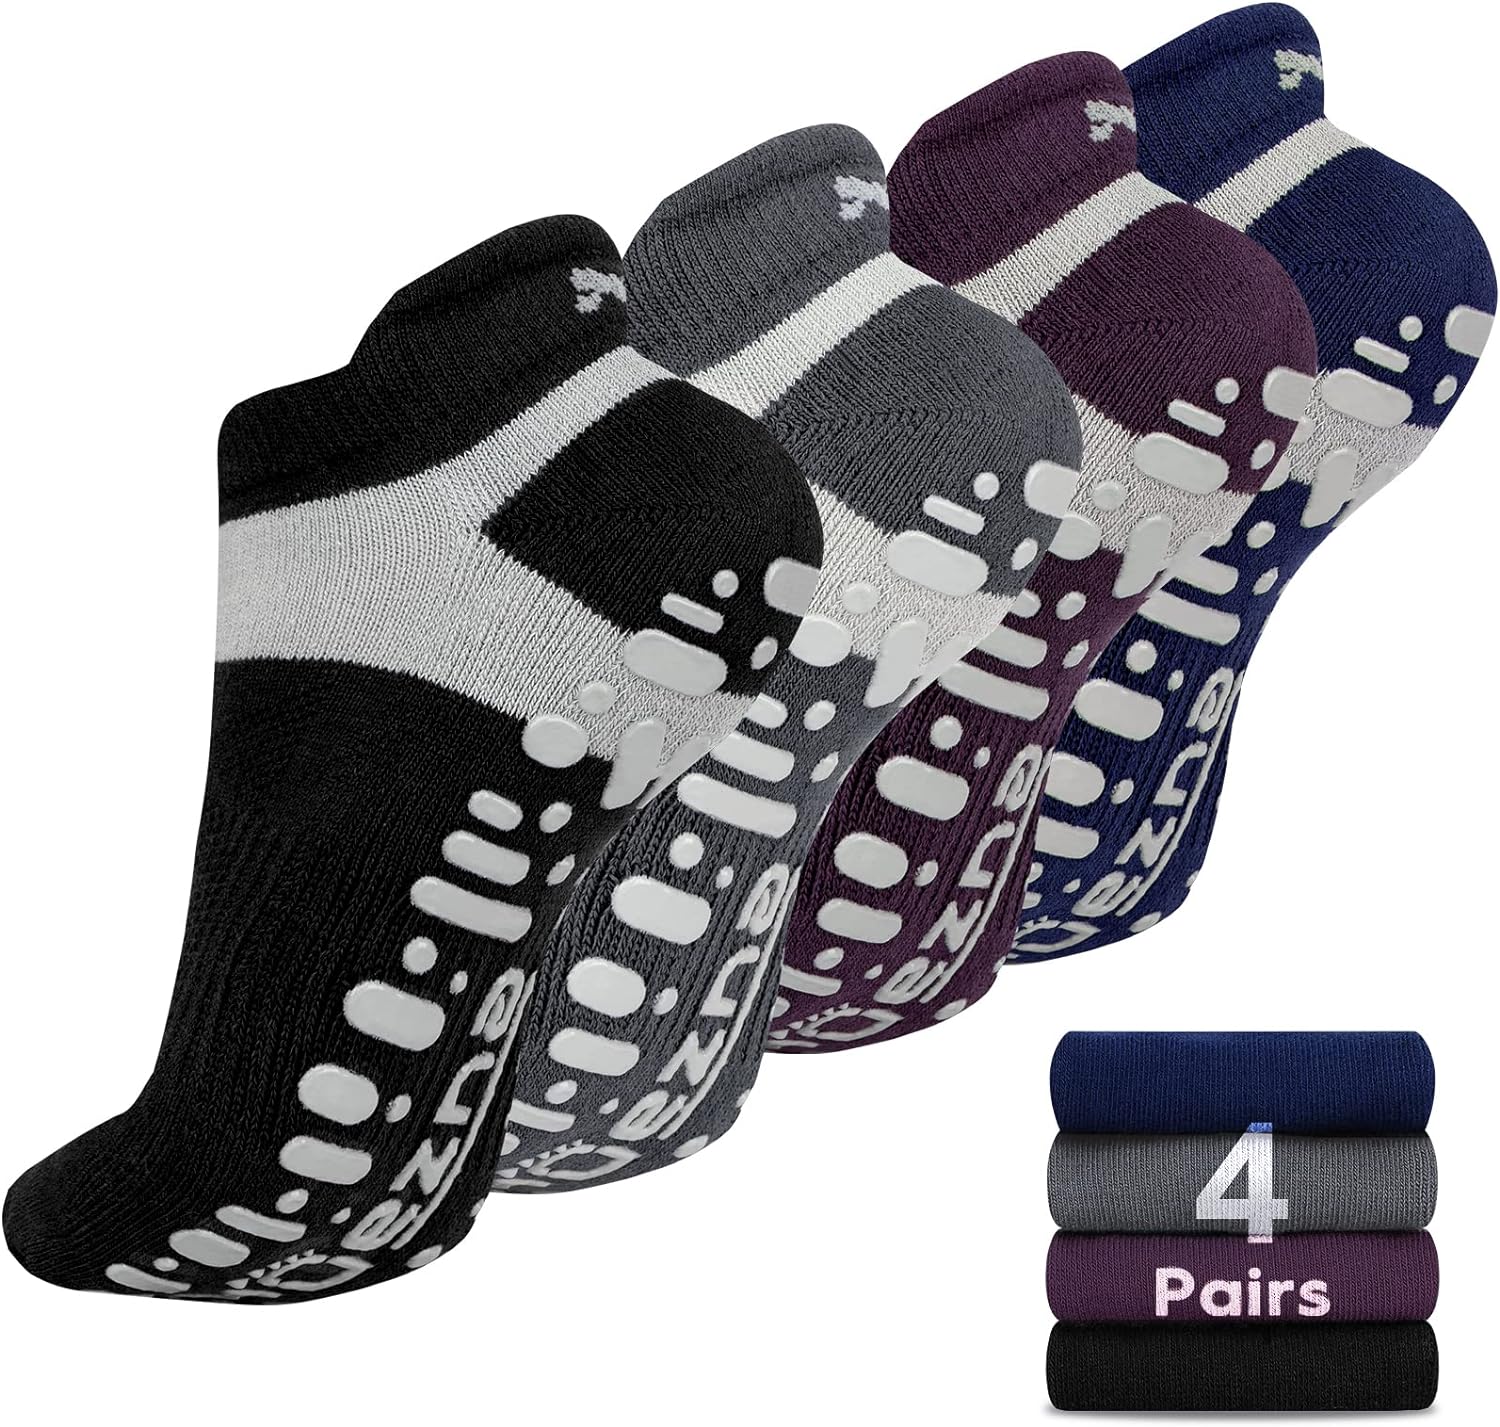  Muezna Non Slip Yoga Socks for Women, Anti-Skid Pilates, Barre,  Hospital Socks with Grips, Size 5-10 : Clothing, Shoes & Jewelry